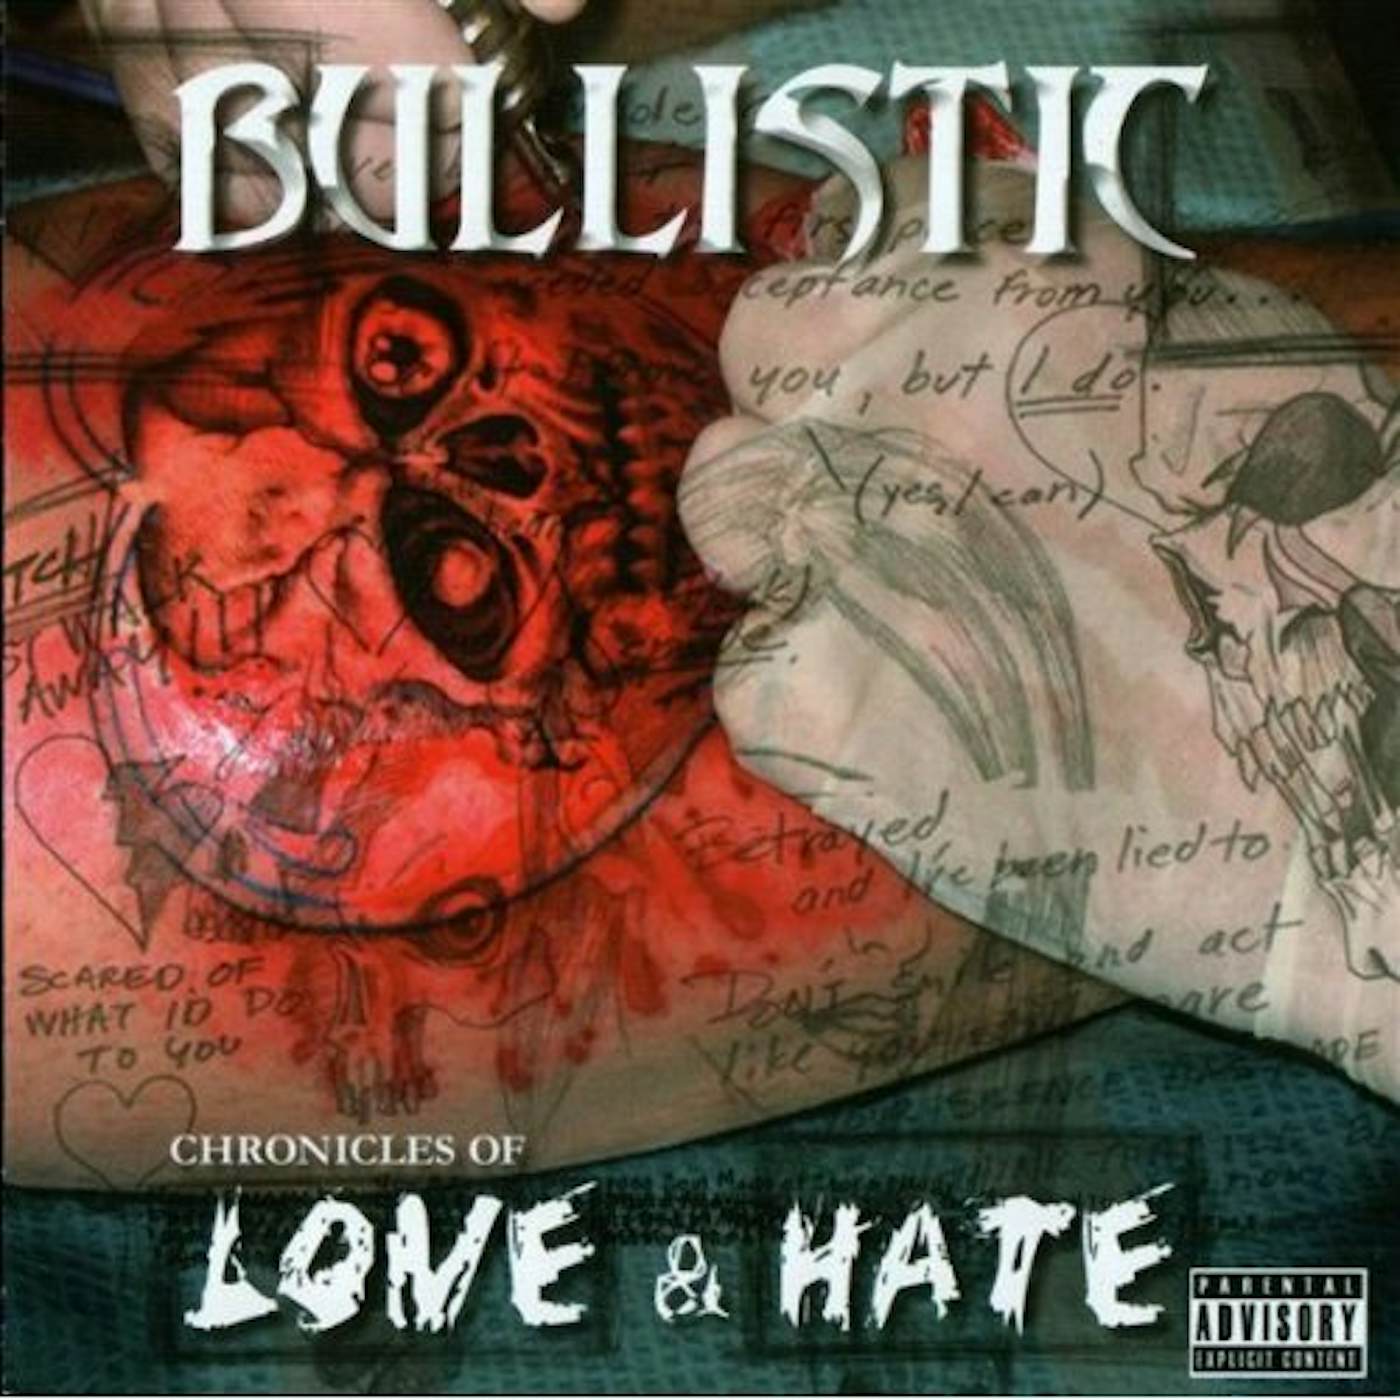 BULLISTIC CHRONICLES OF LOVE & HATE CD